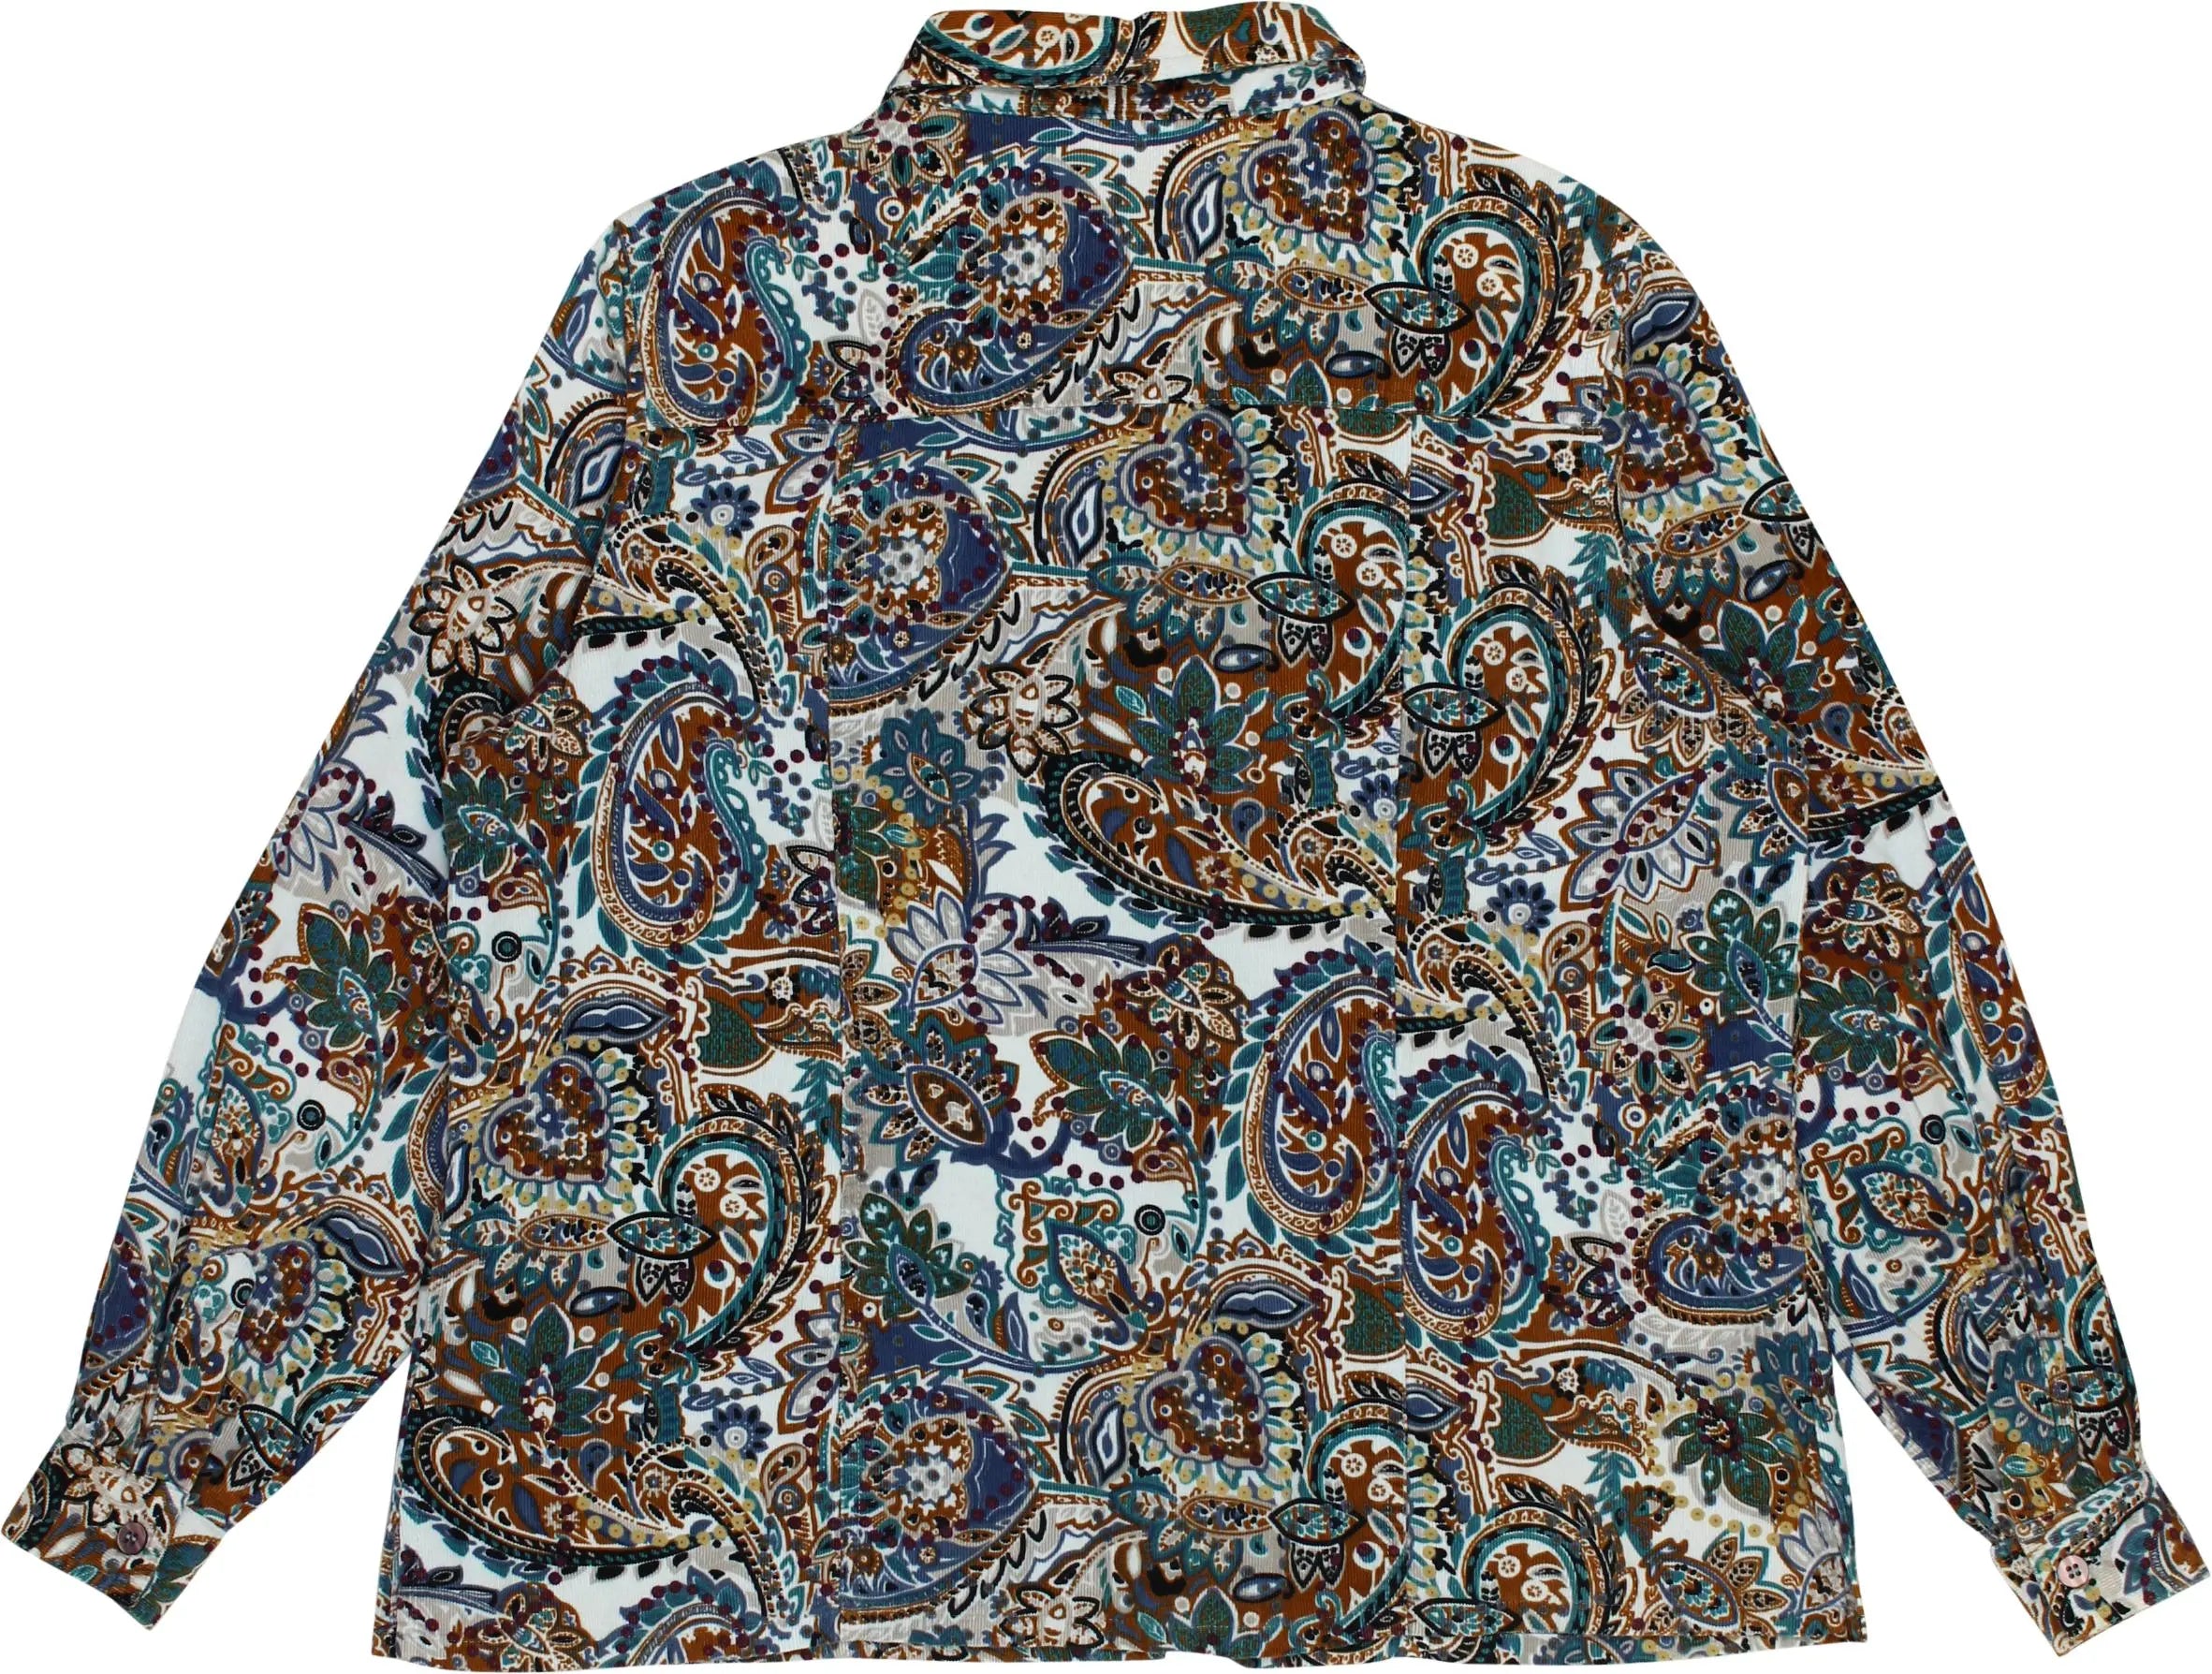 Koret - Corduroy Shirt- ThriftTale.com - Vintage and second handclothing